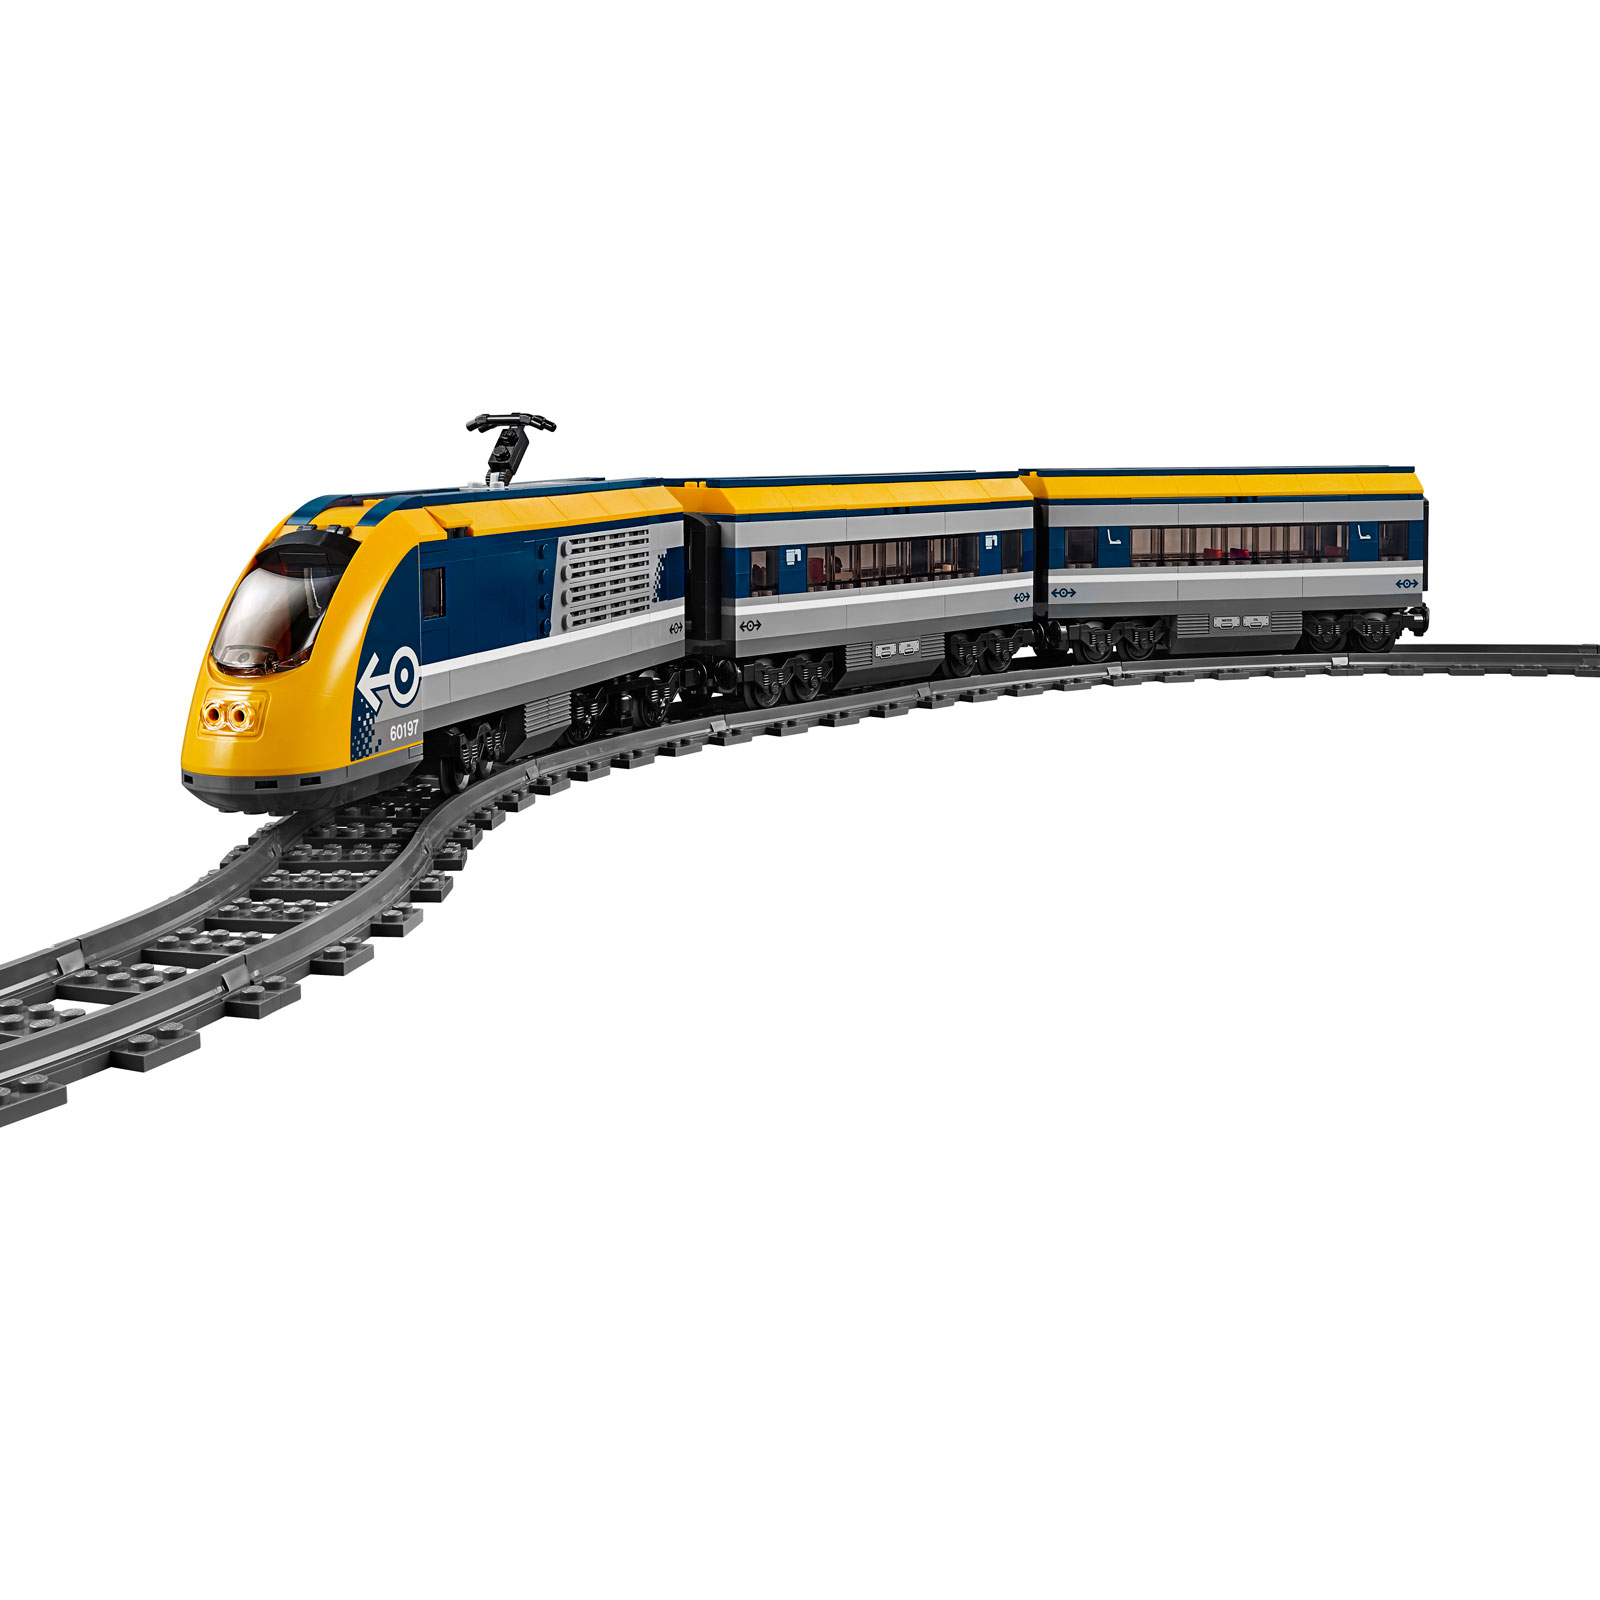 LEGO City Passenger Train 60197 